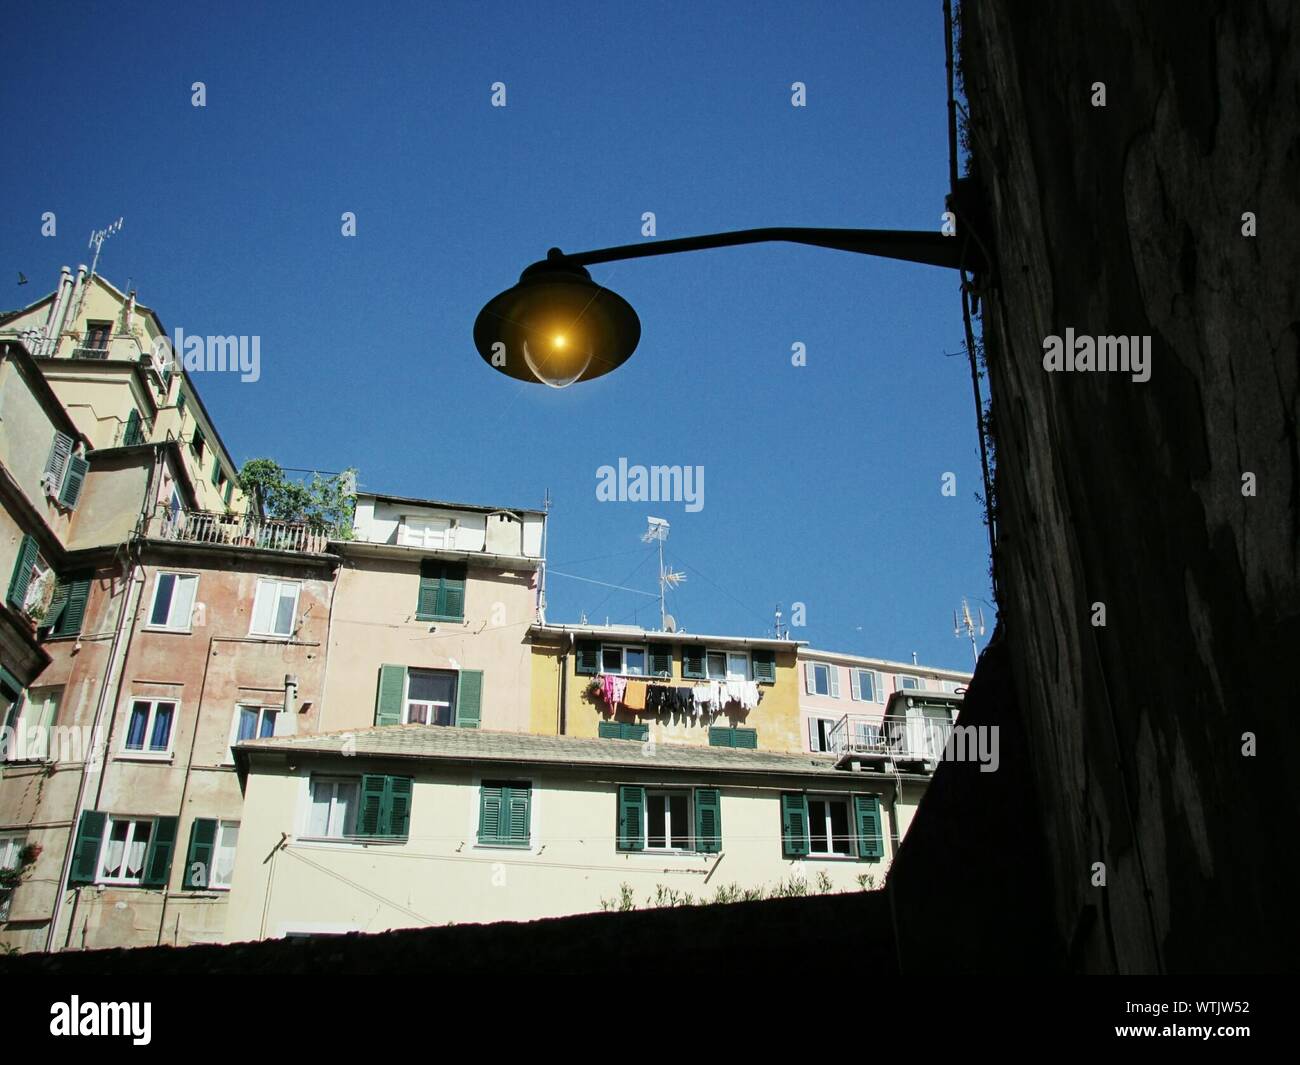 Building Exteriors And Street Lighting Lamp Stock Photo